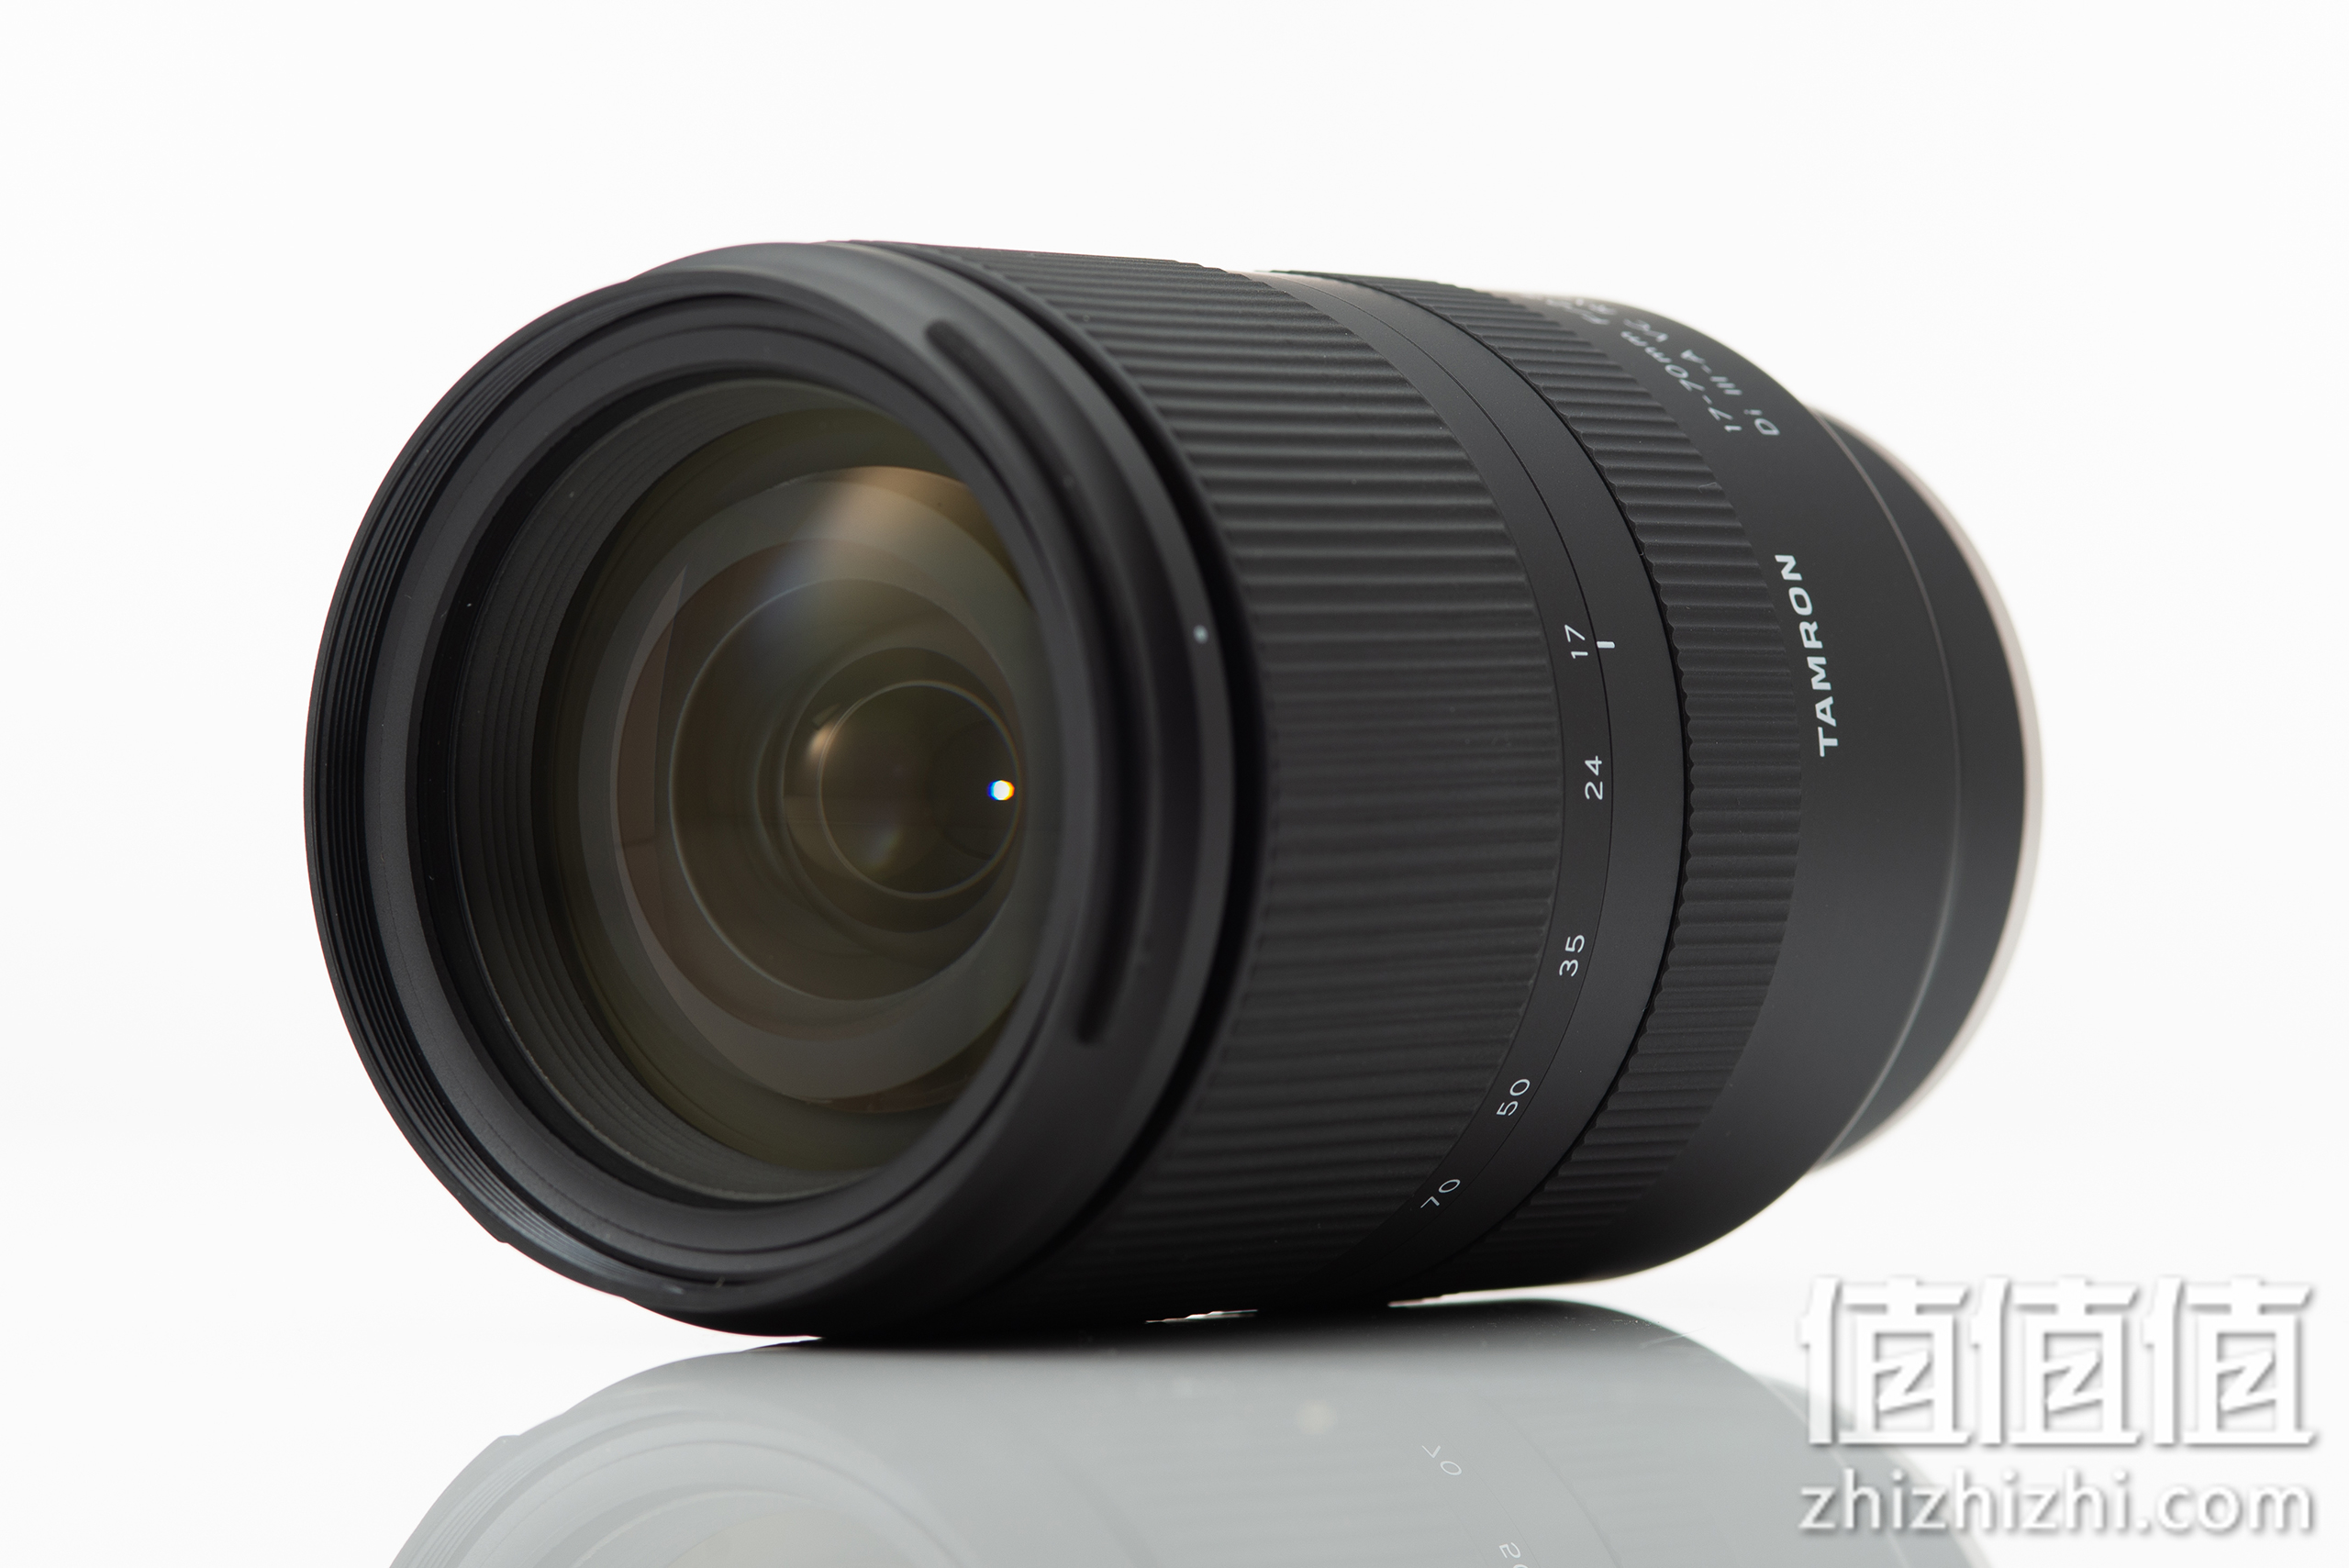 Tamron 腾龙 17-70mm f/2.8 (B070) APS-C画幅 标准变焦镜头